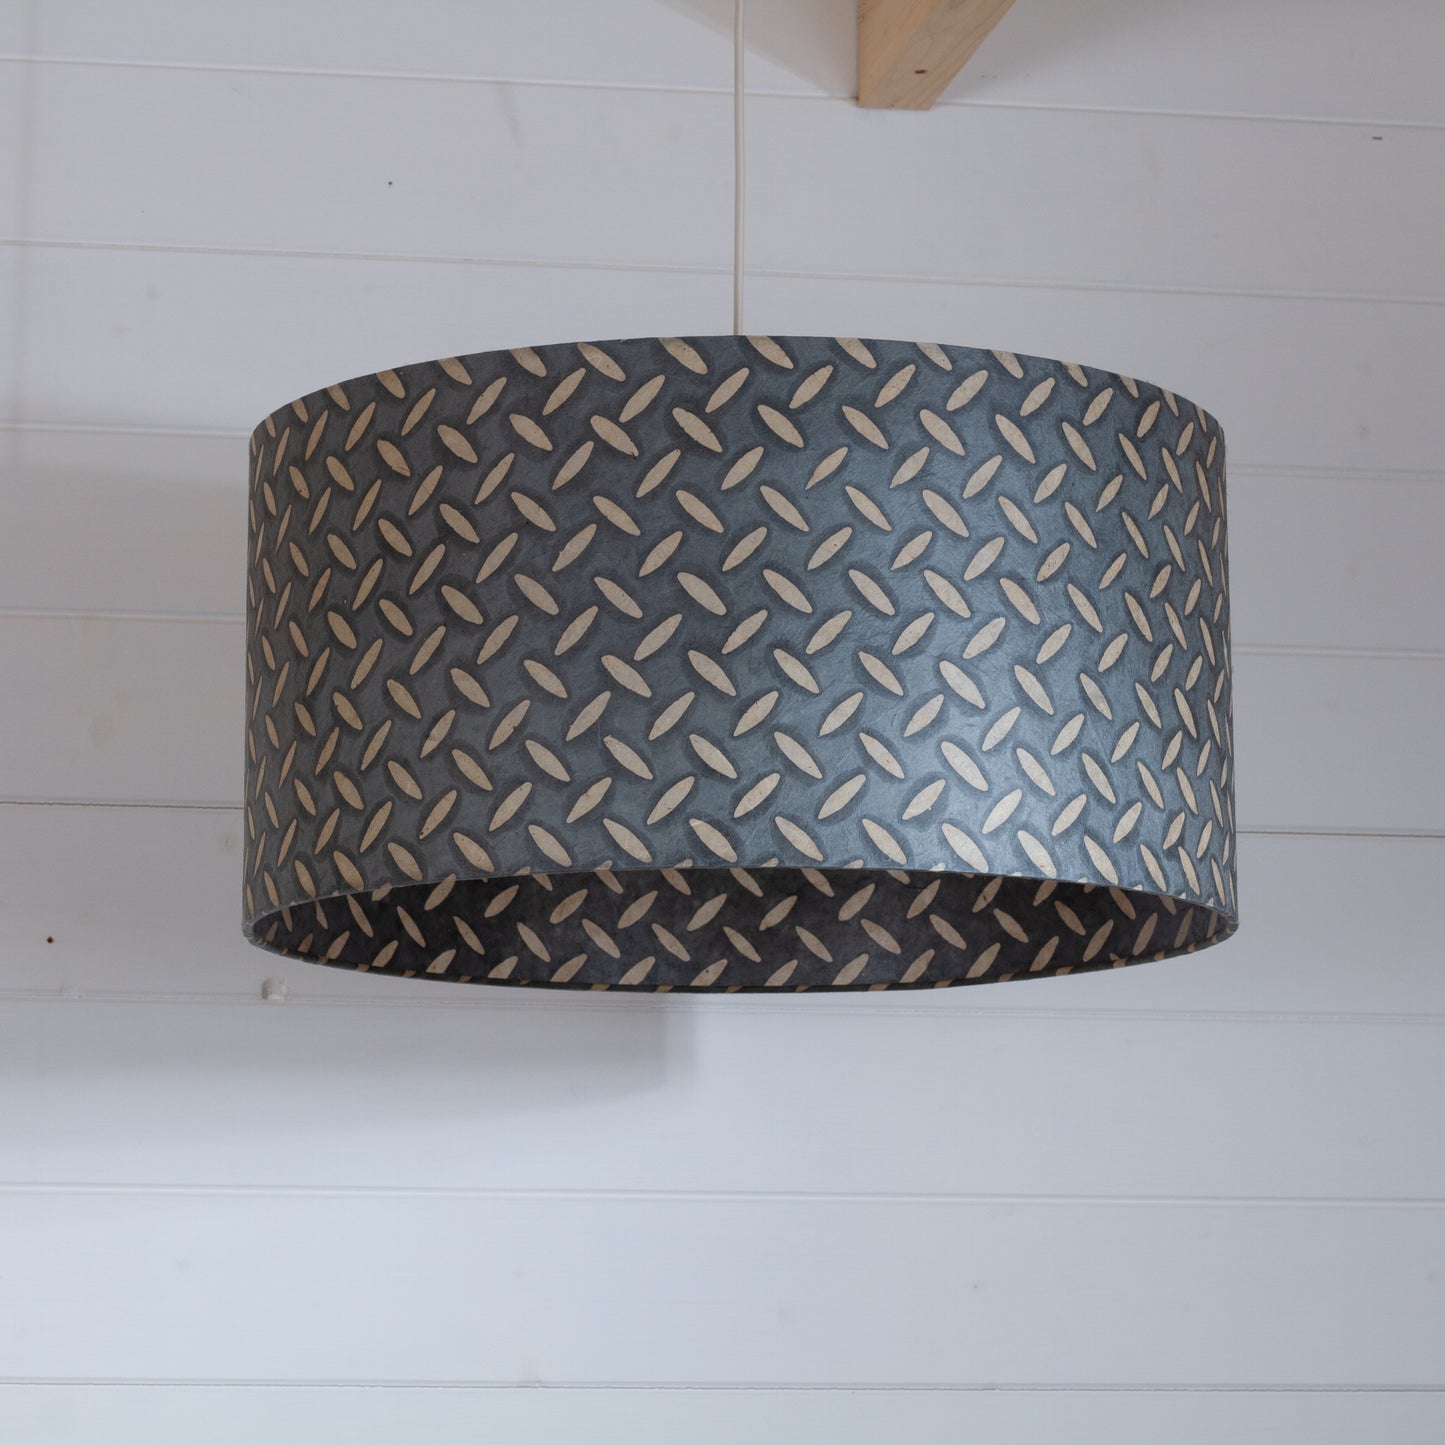 Drum Lamp Shade - P88 ~ Batik Tread Plate Grey, 50cm(d) x 25cm(h)